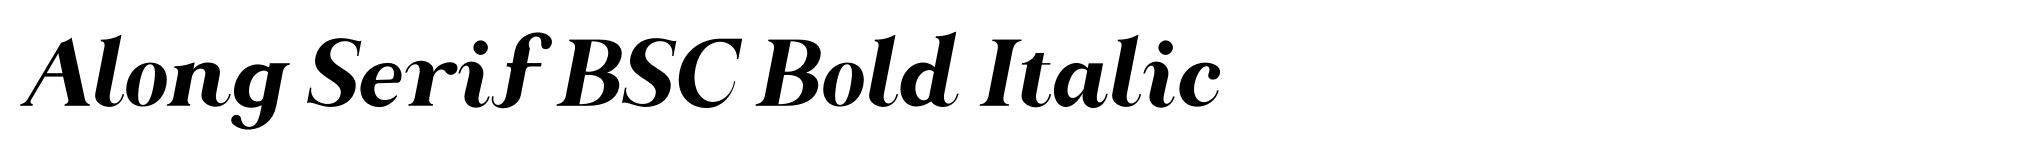 Along Serif BSC Bold Italic image